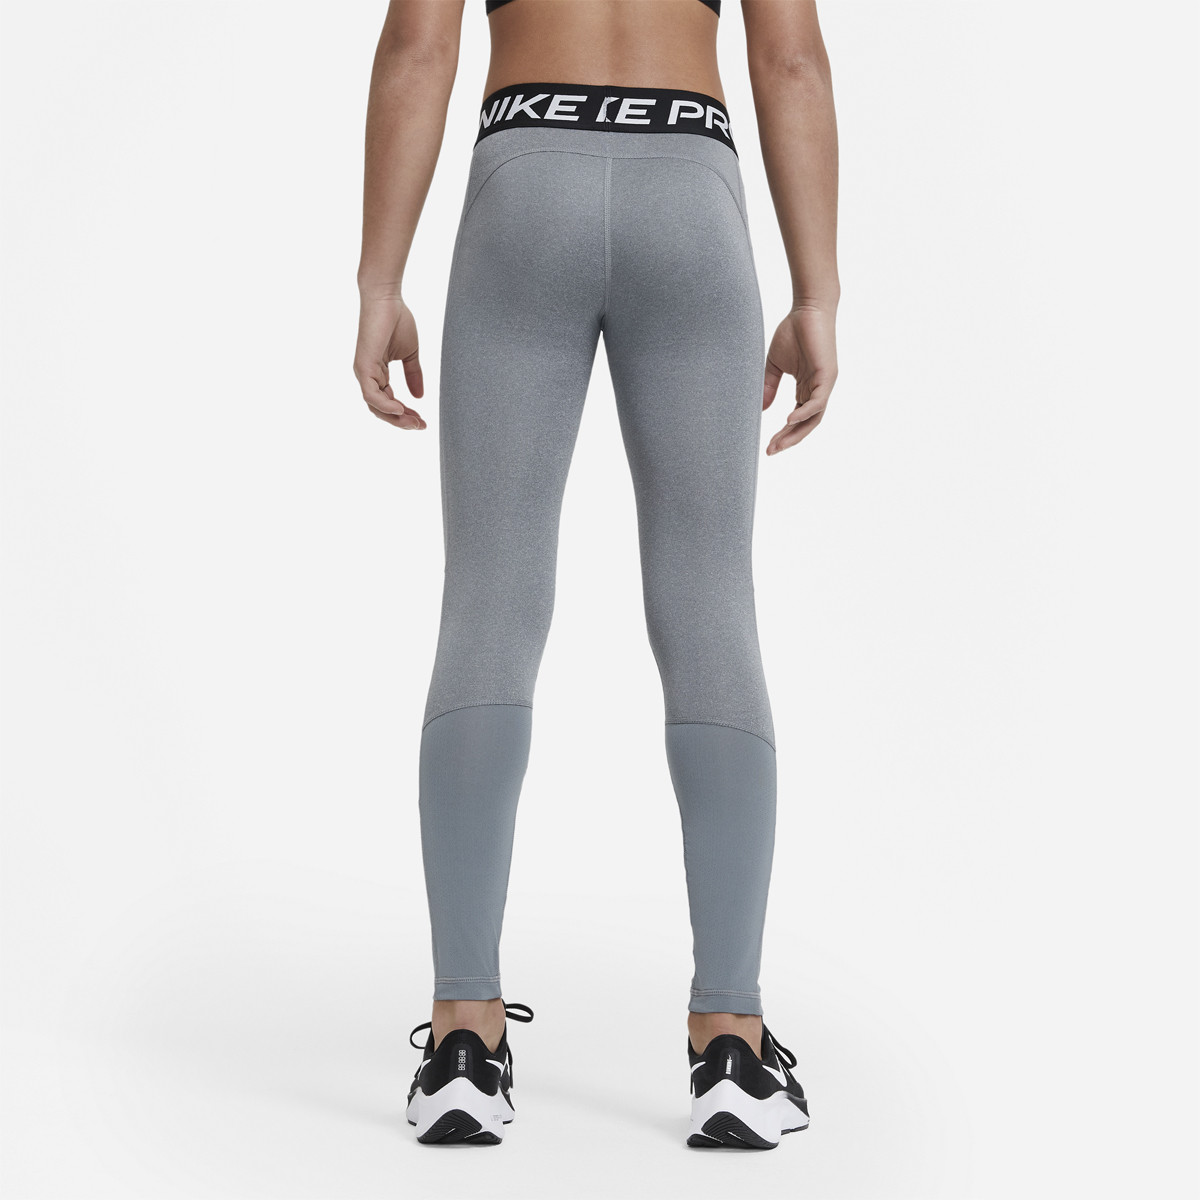 Man / Clothing / Tights / Nike